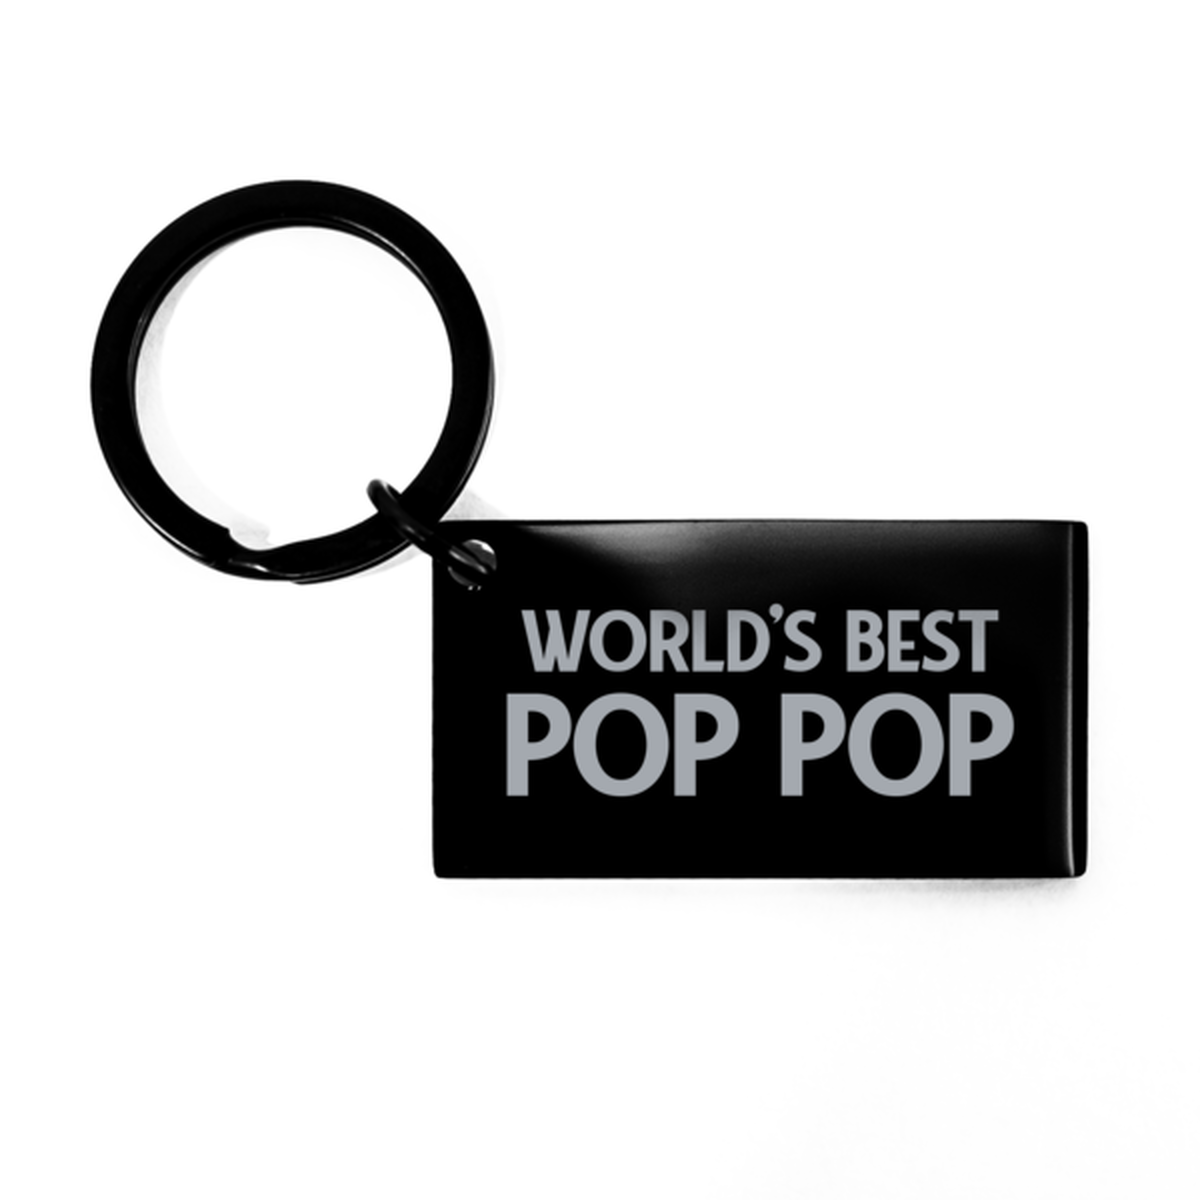 Worlds Best Pop Pop Gifts, Funny Black Engraved Keychain For Pop Pop, Birthday Presents For Men